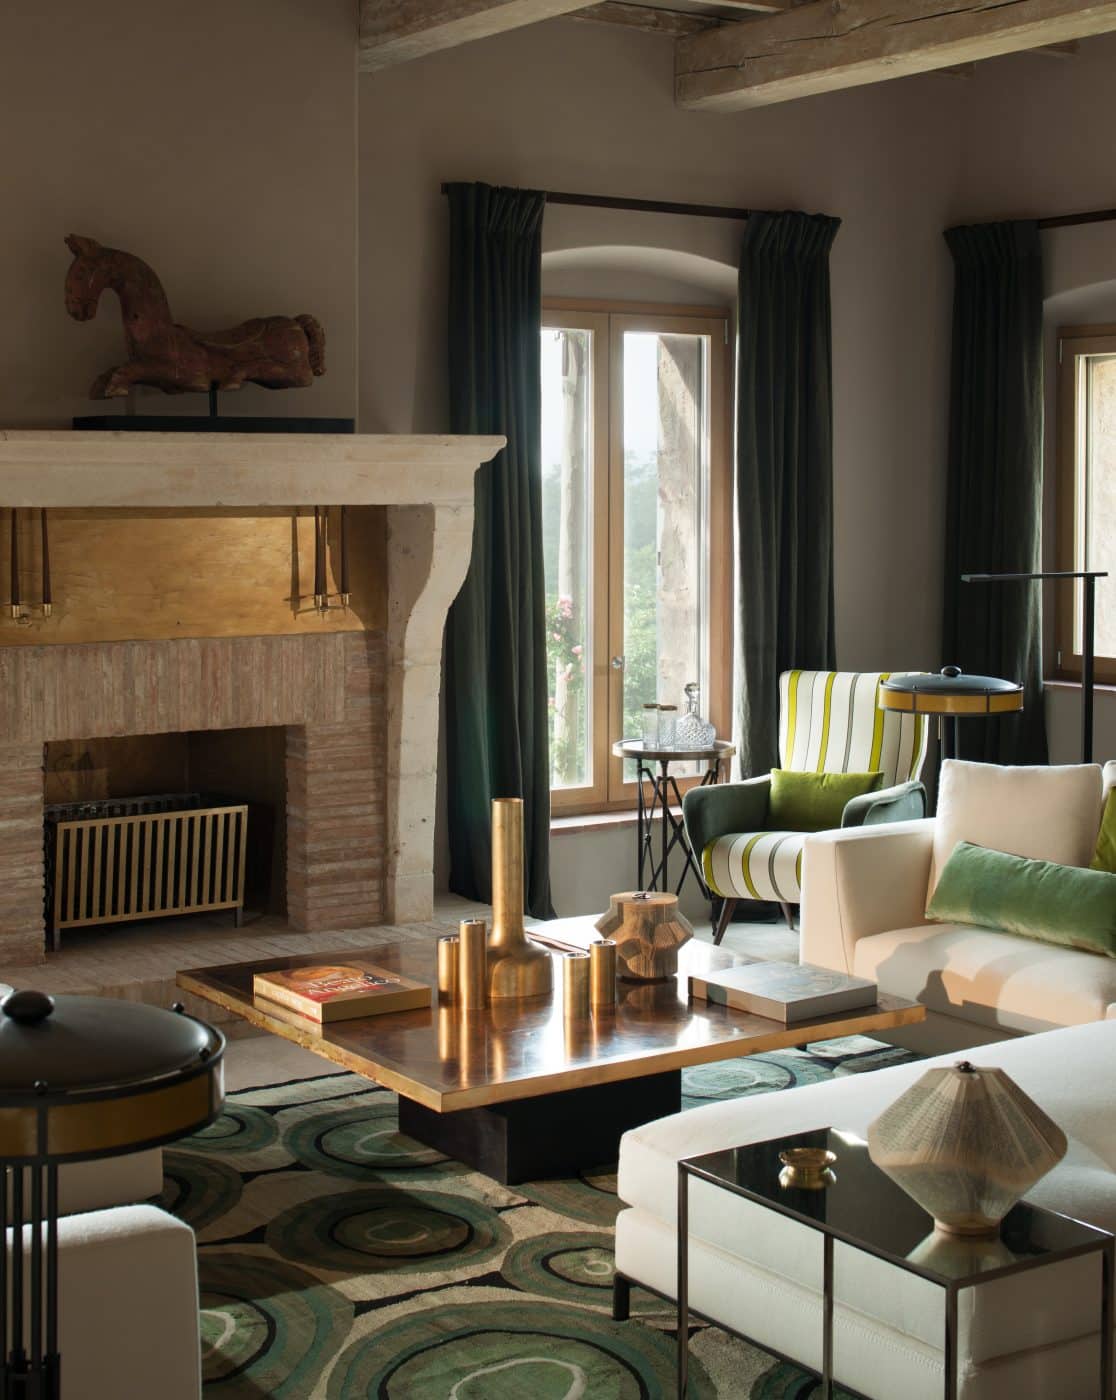 Casa delle Suore living room with bronze coffee table